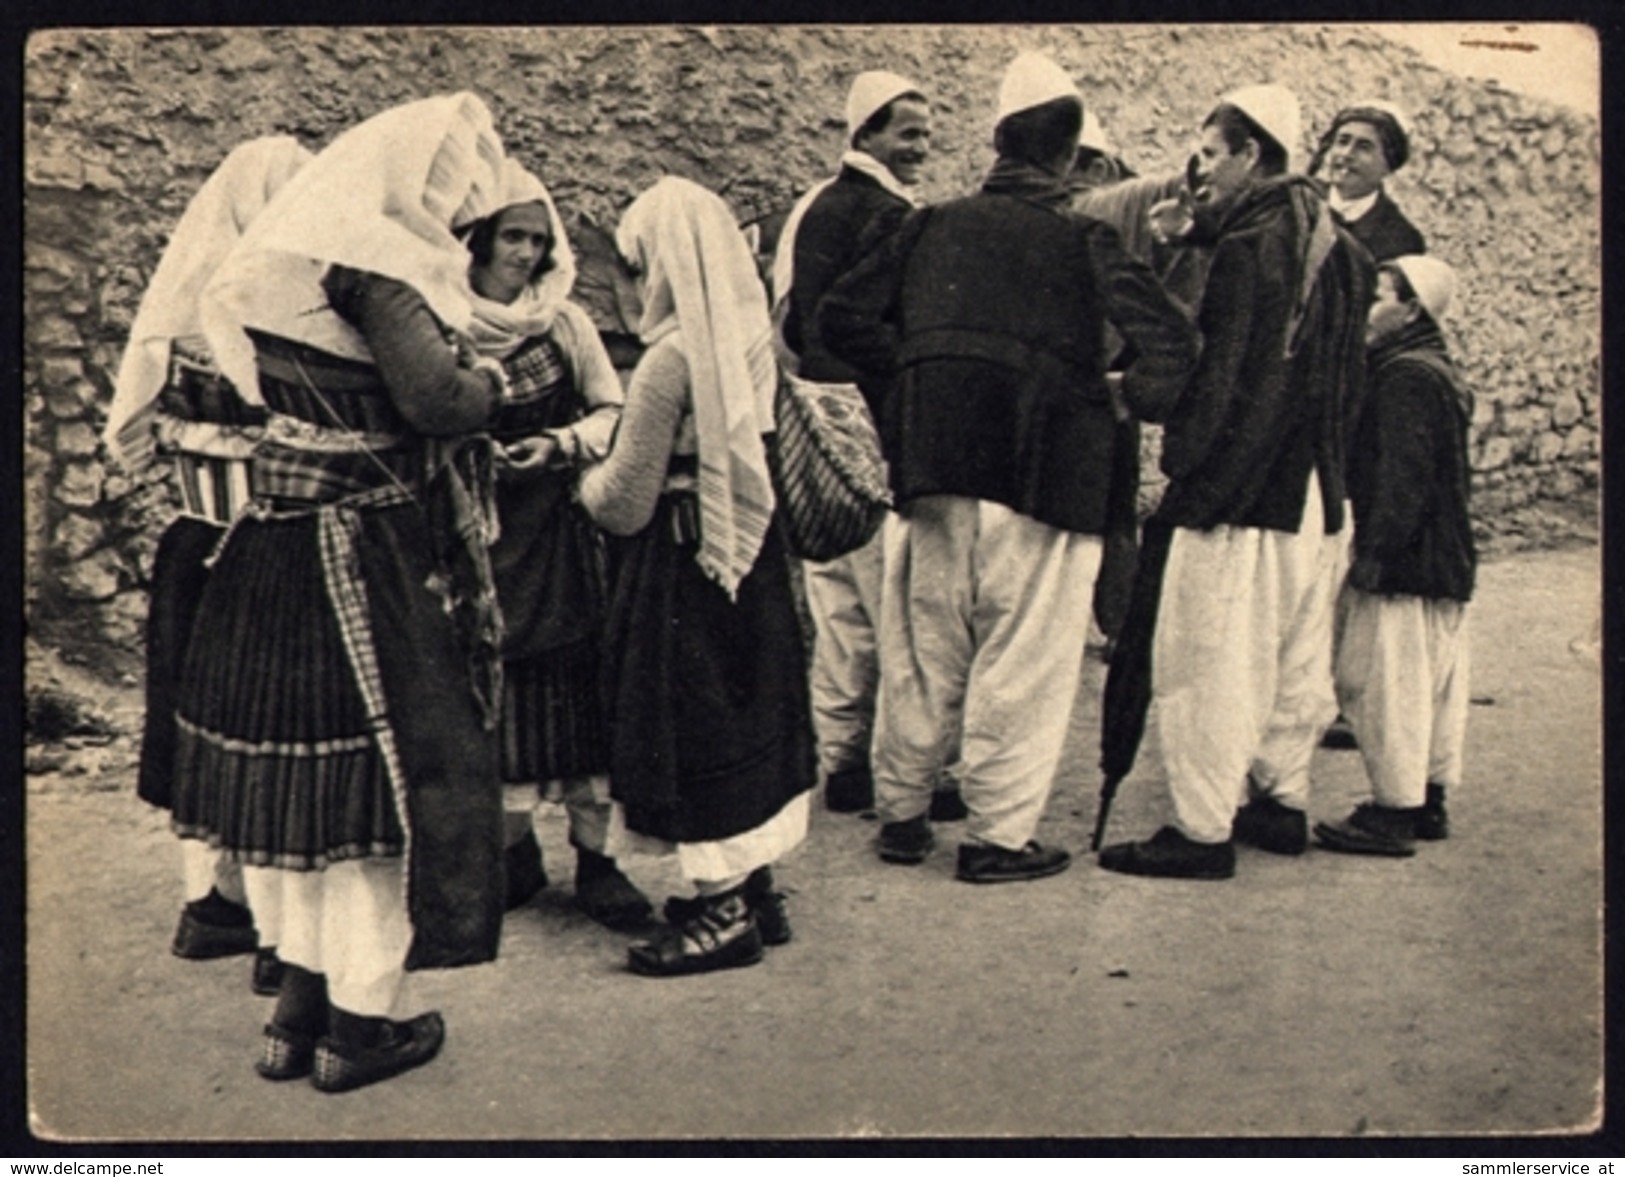 [000] Albanien / Albania, Skodër / Scutari, &ldquo;Kostume Të Zadrimës"  Um 1940 (gel. 1957), Edizioni DISTAPTUR (187) - Albanien